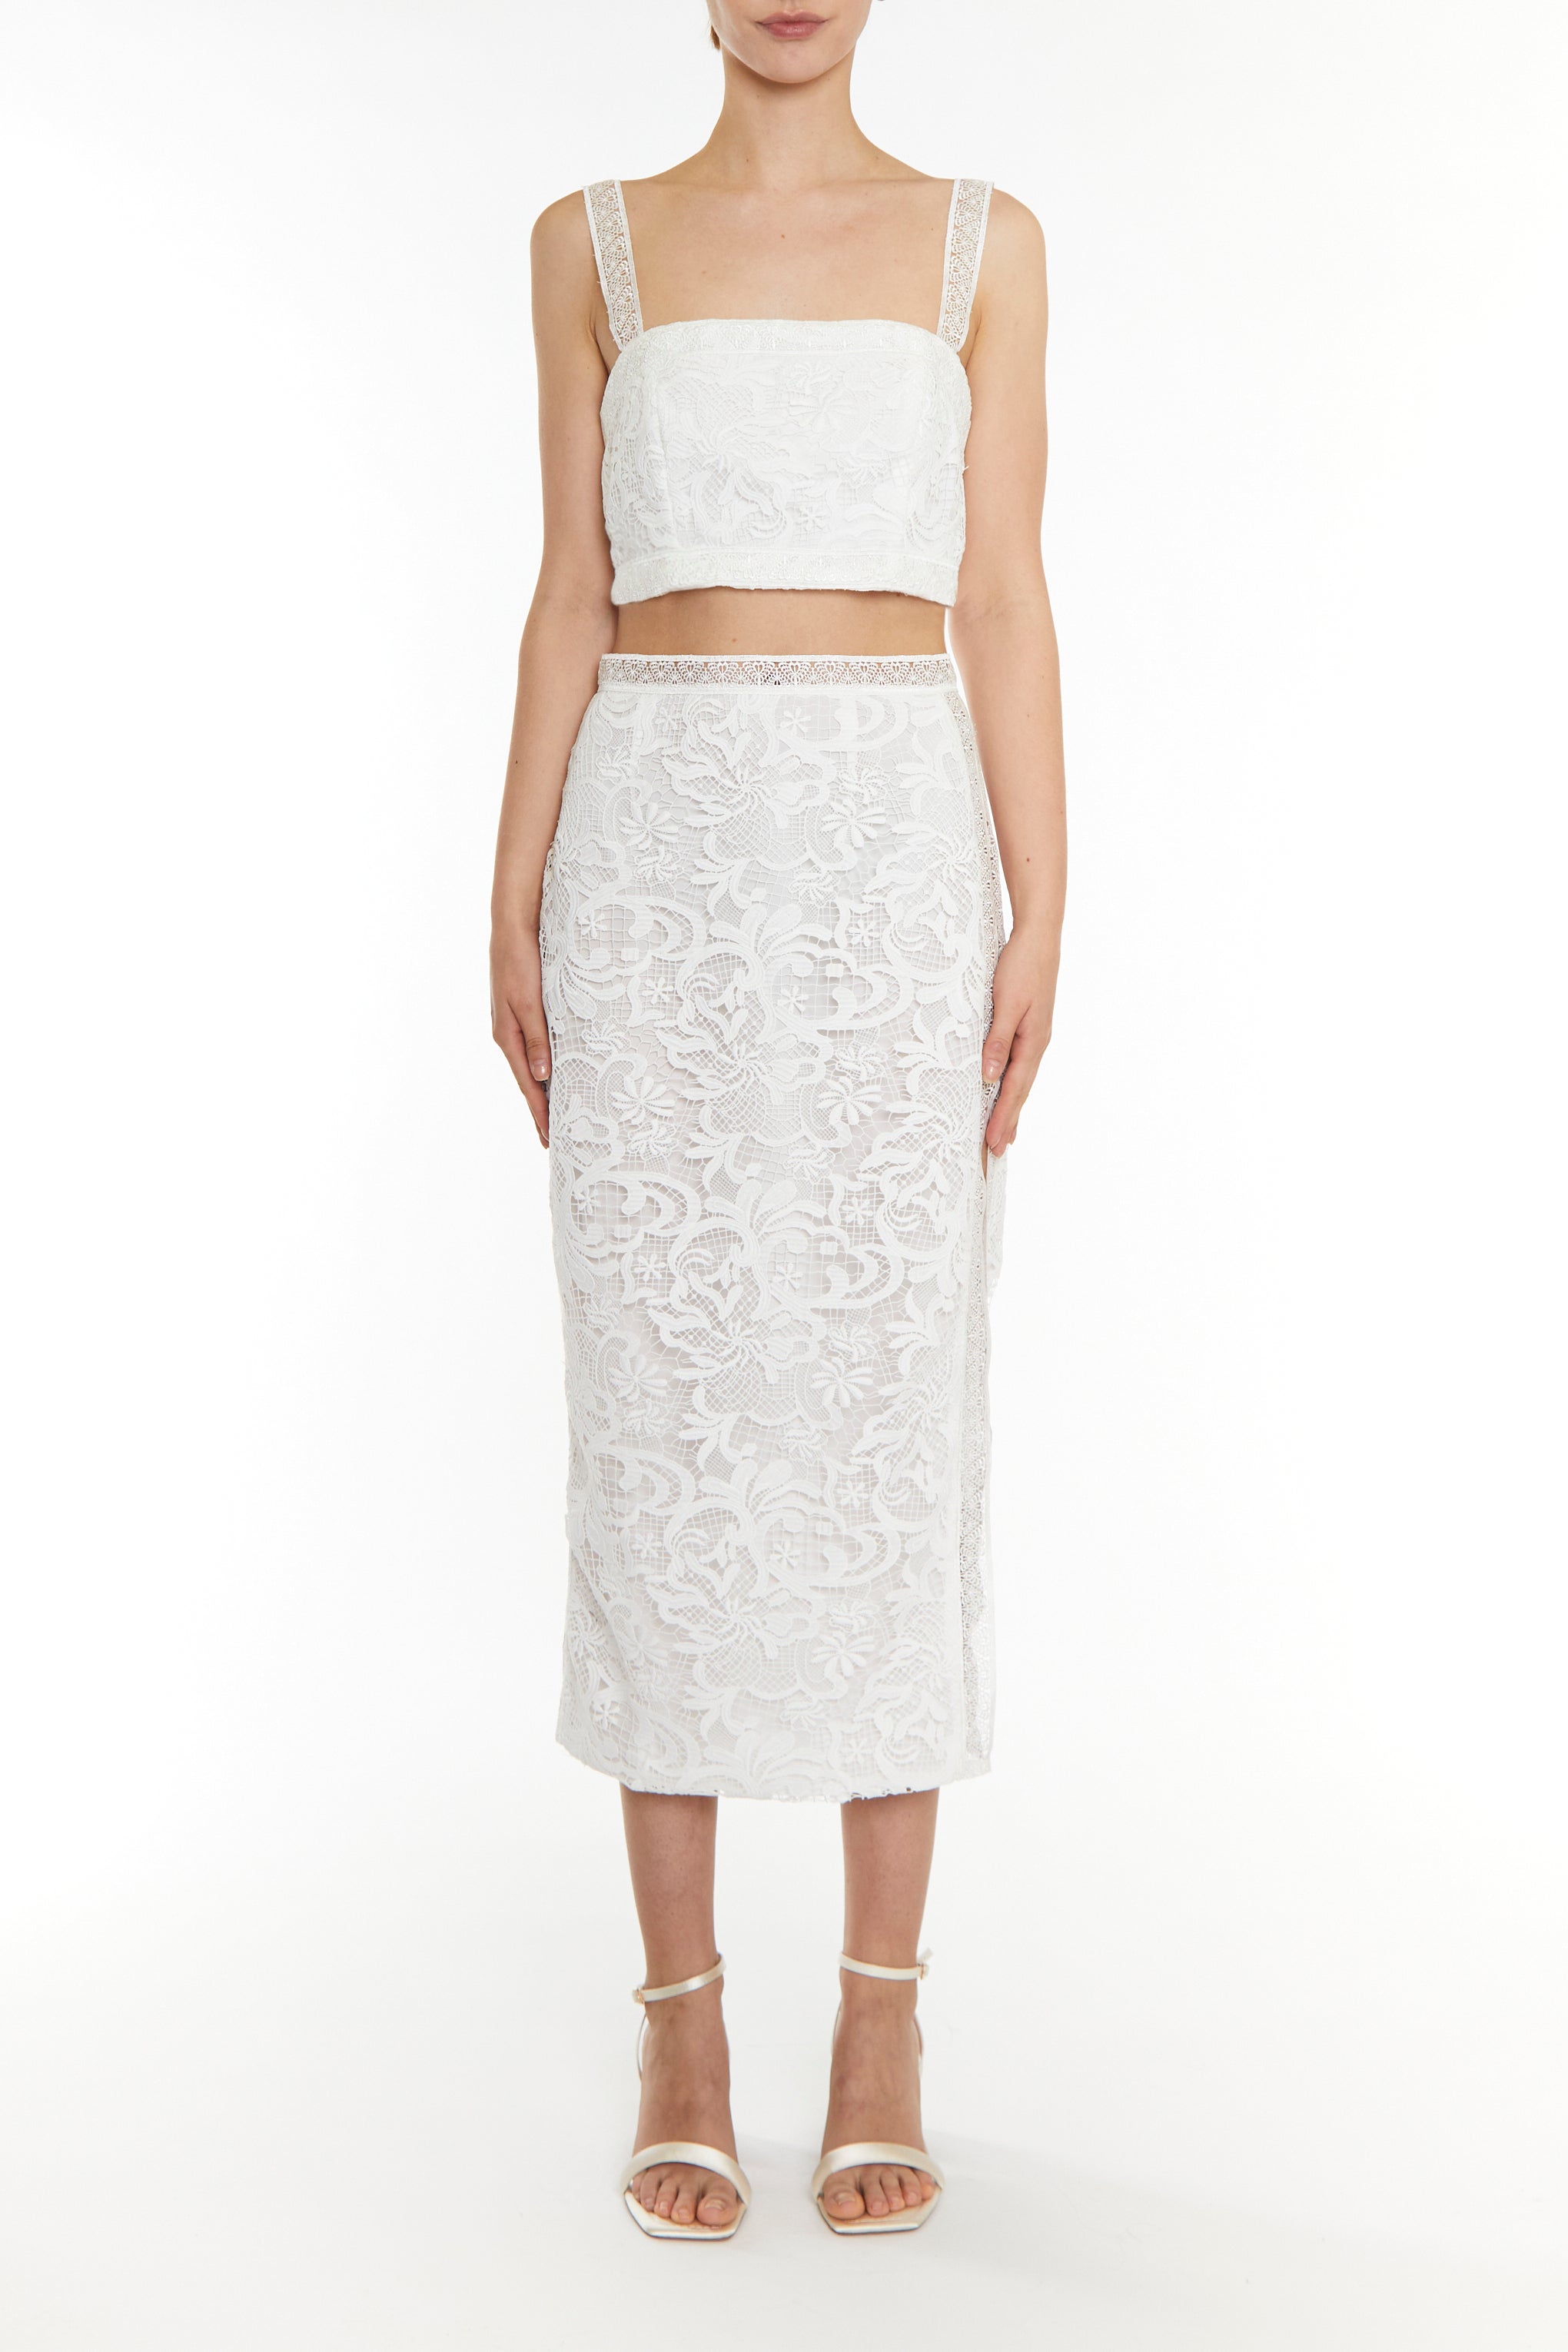 Celine Co-ord White Lace Trim Pencil Midi Skirt-image-1